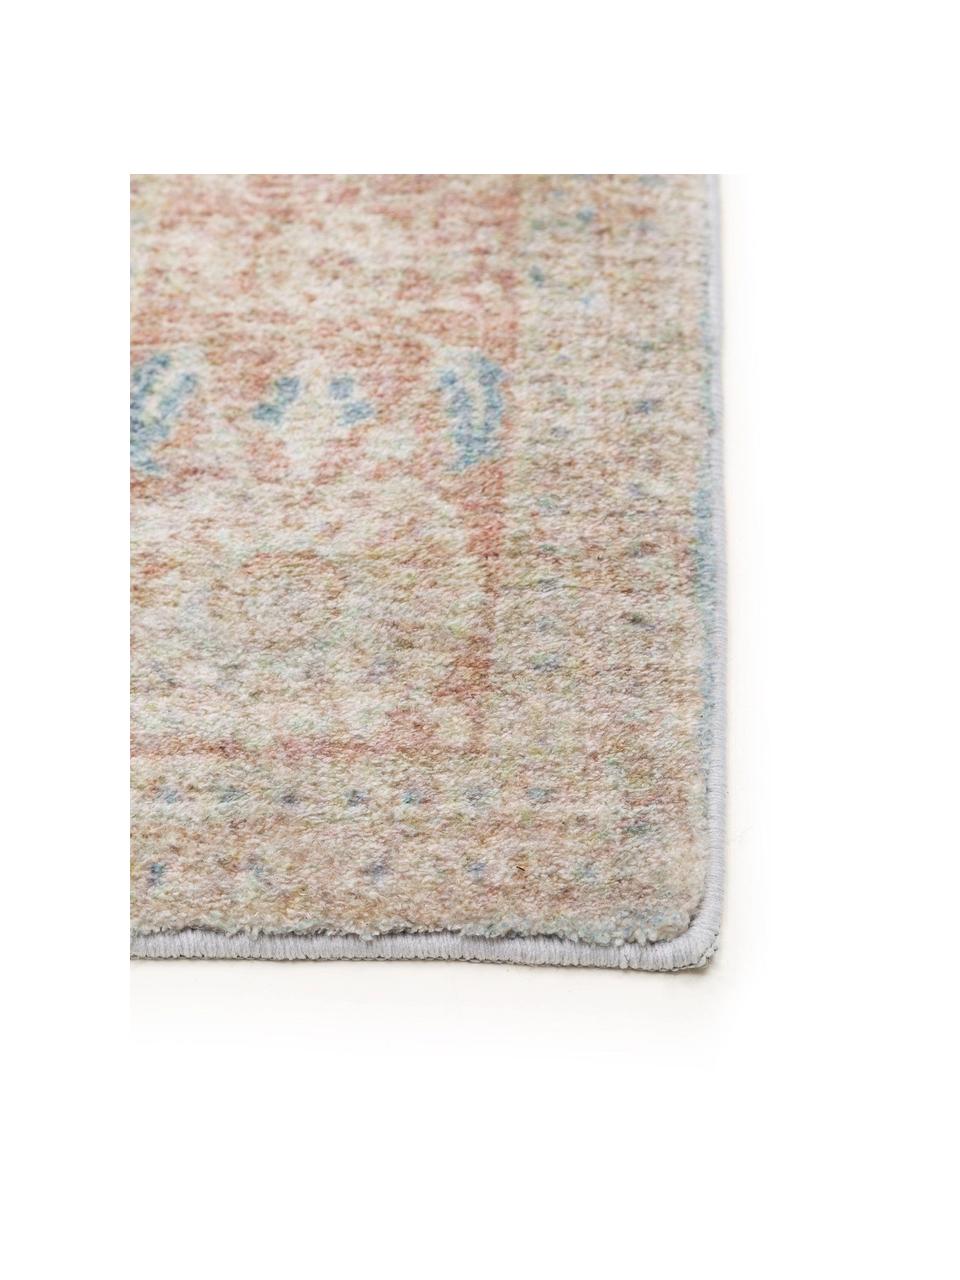 Kurzflor-Teppich Mara mit Ornamentmuster, 100 % Polyester, Blau, Apricot, Bunt, B 80 x L 150 cm (Größe XS)